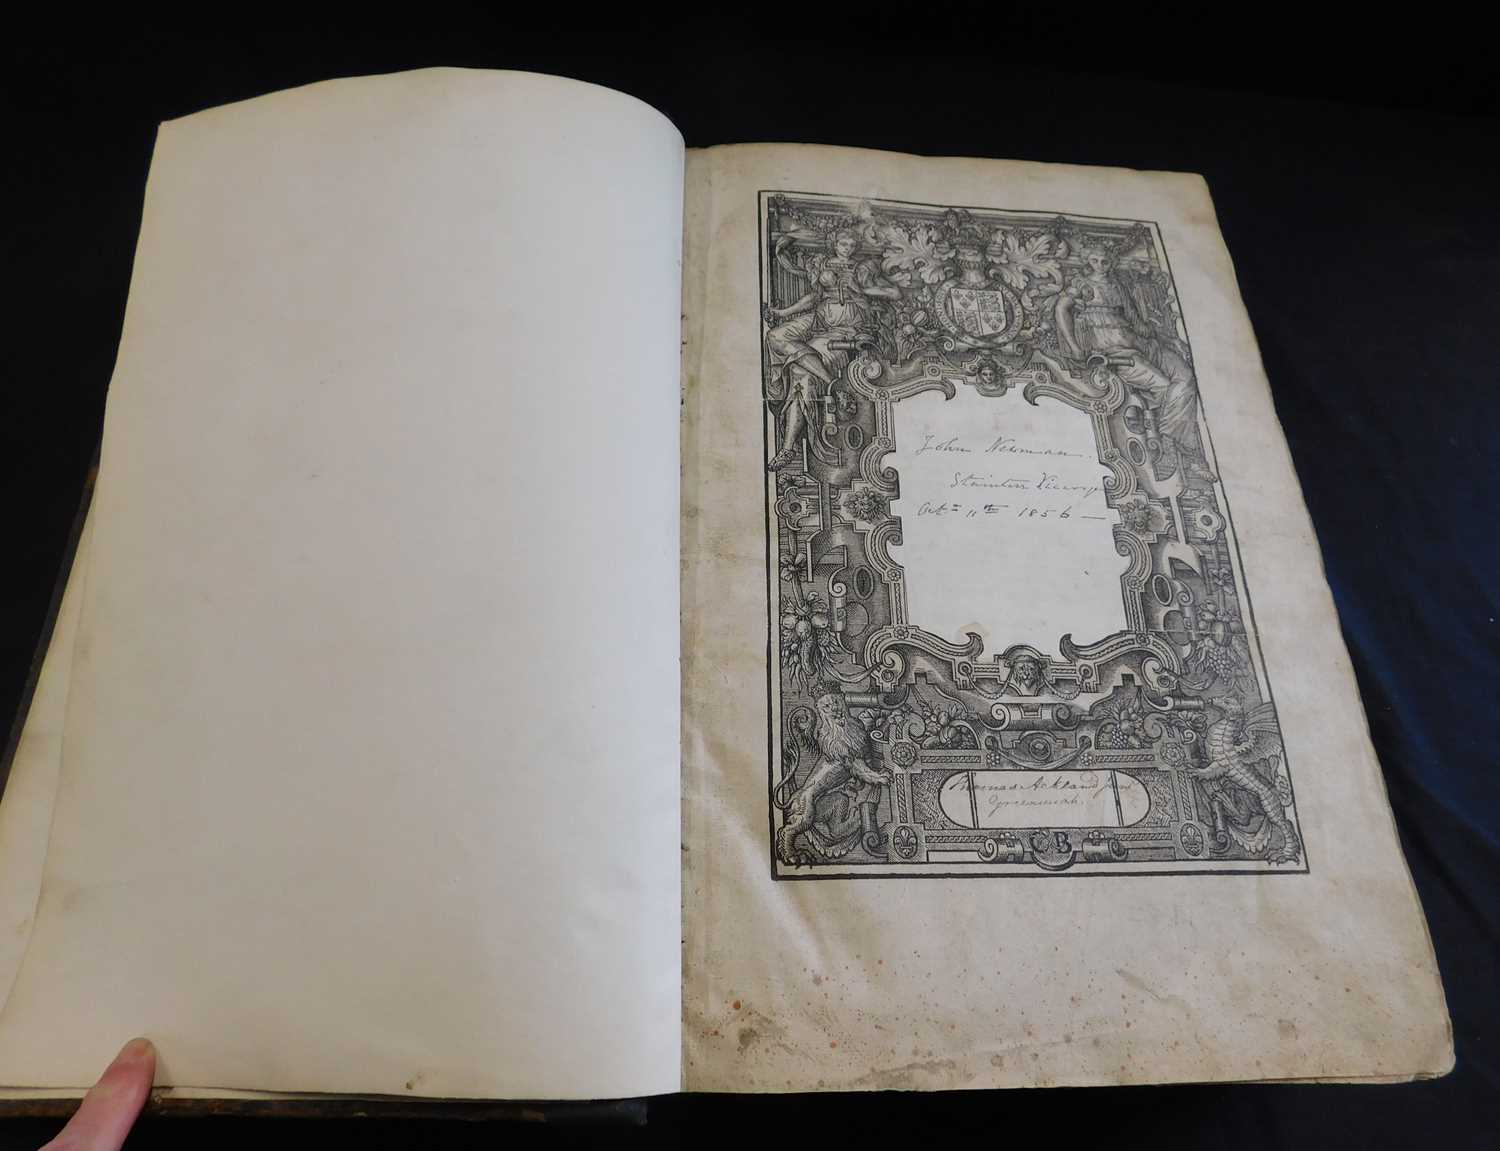 THE BIBLE..., London, Christopher Barker, 1583 Geneva version, black letter, lacks general title,